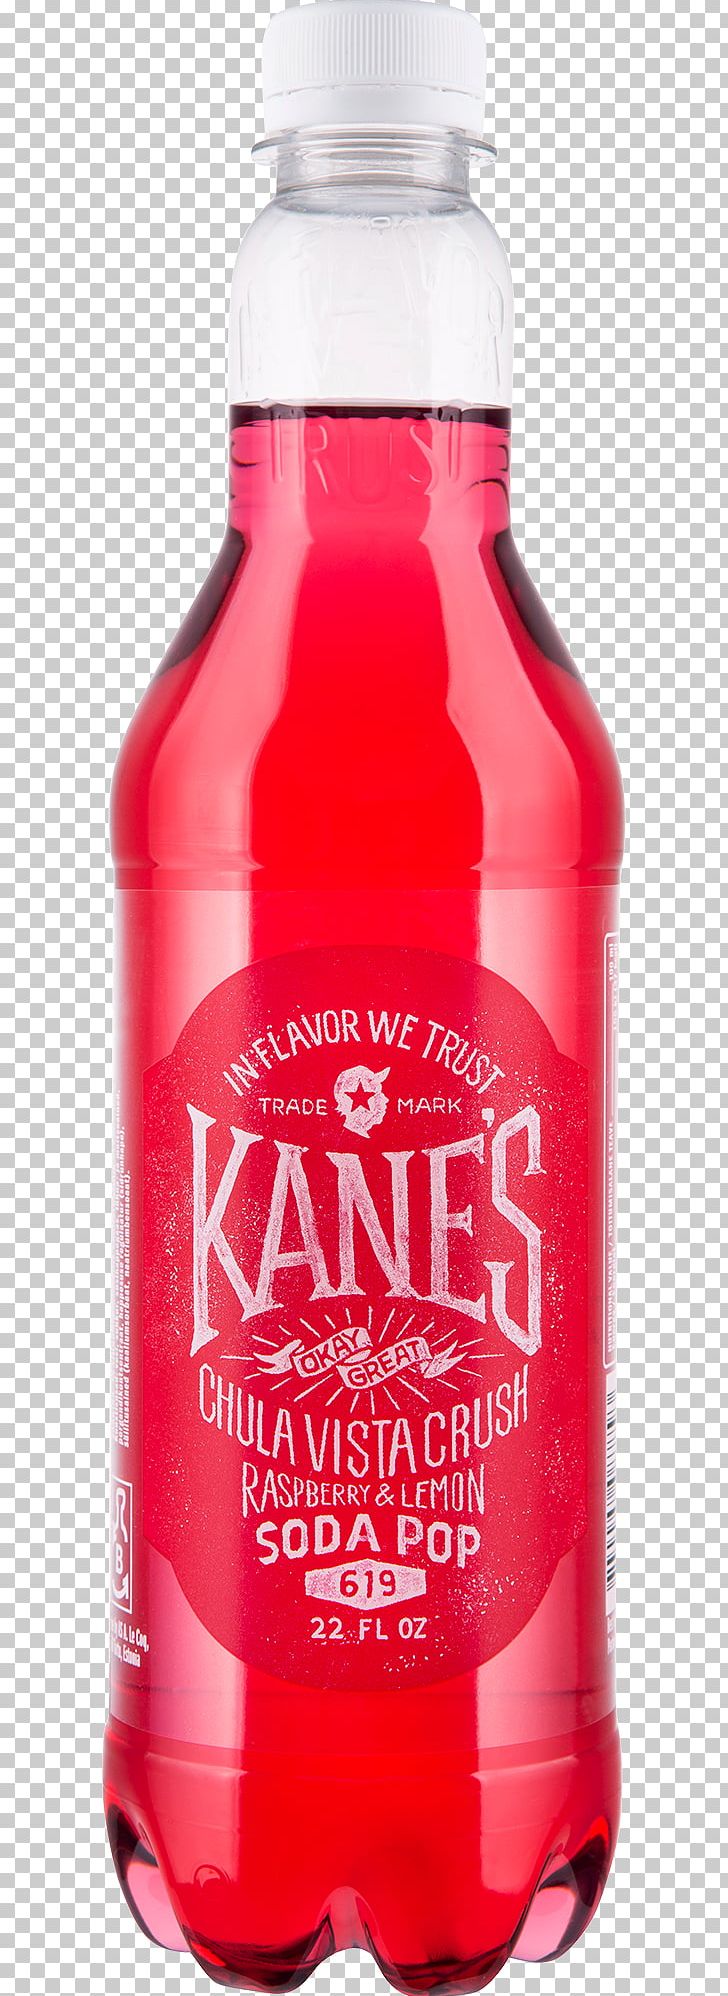 Fizzy Drinks Kane’s Soda Pop Pomegranate Juice Lemonade PNG, Clipart,  Free PNG Download